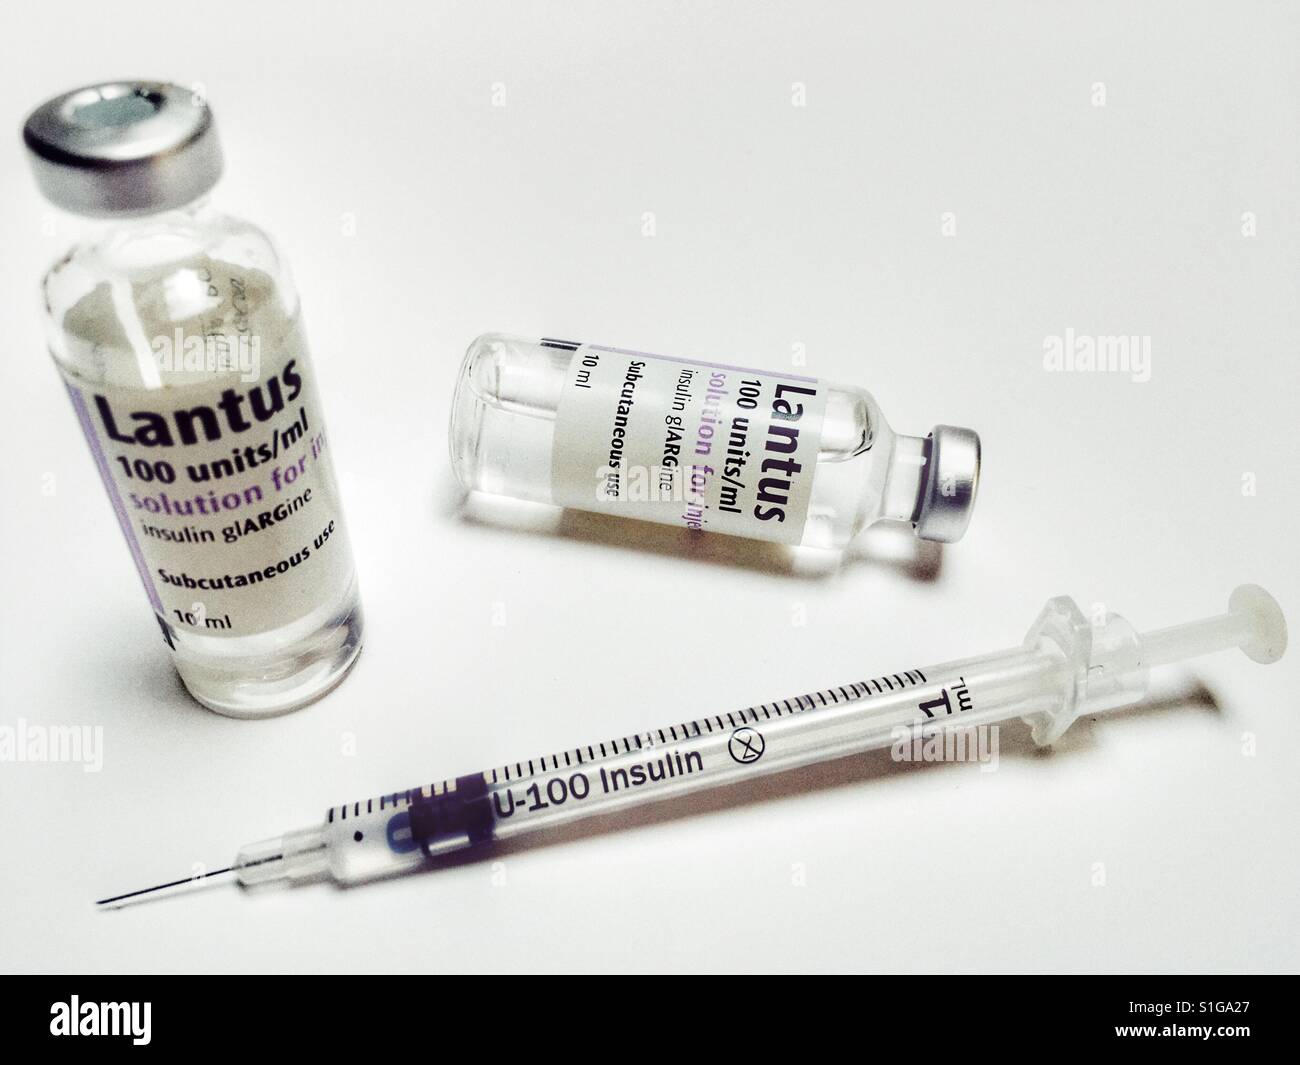 Lantus insulin Stockfotografie - Alamy